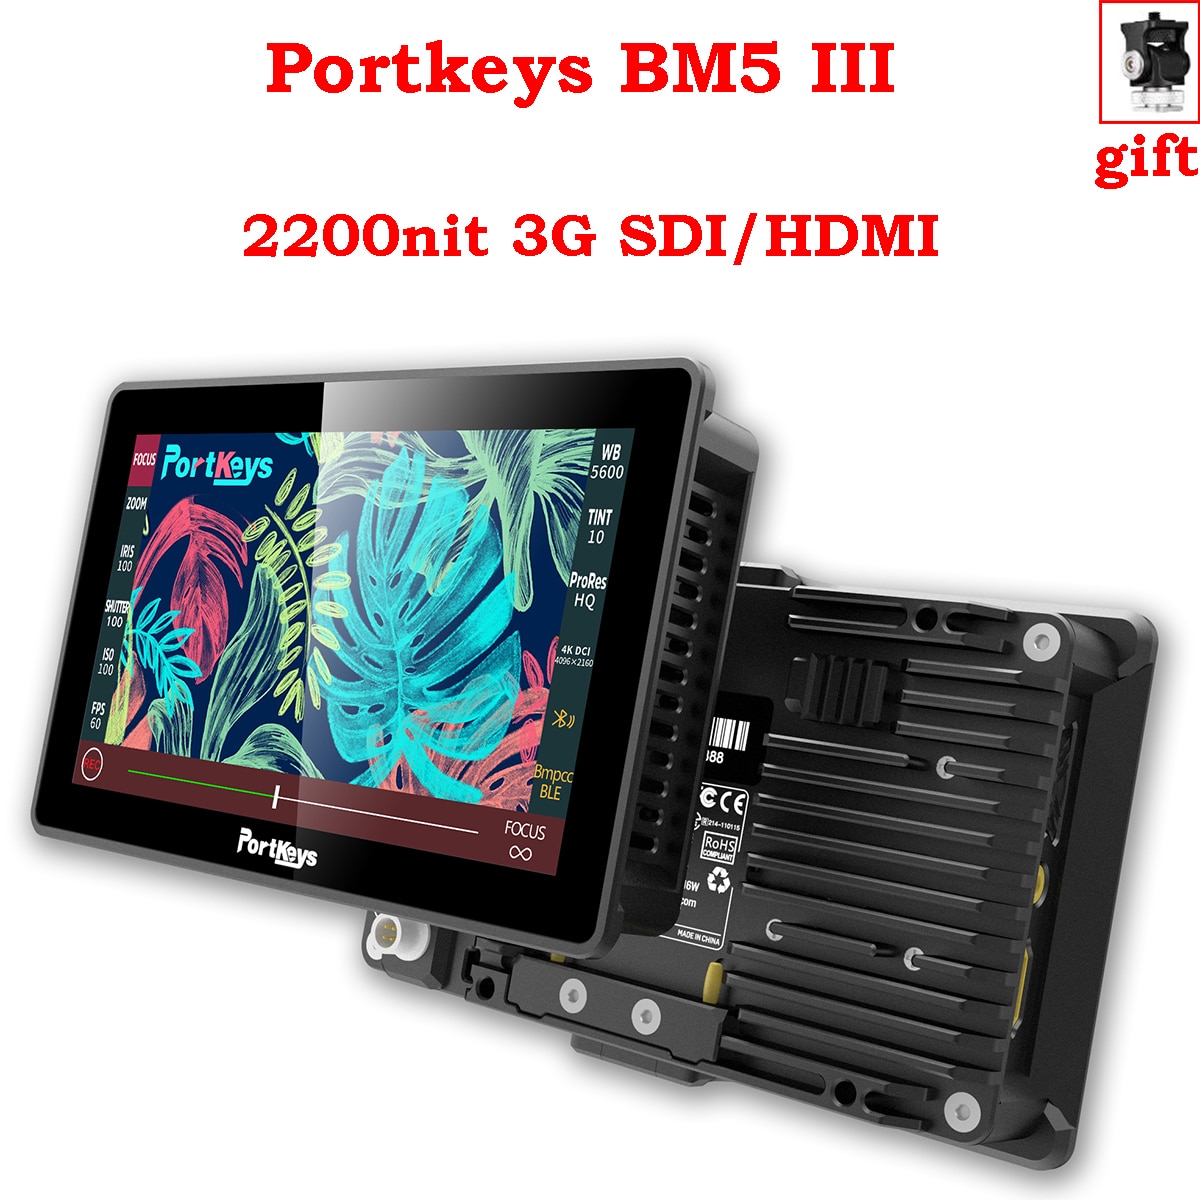 Portkeys BM5 III , 2200nit 3G SDI/HDMI  ..